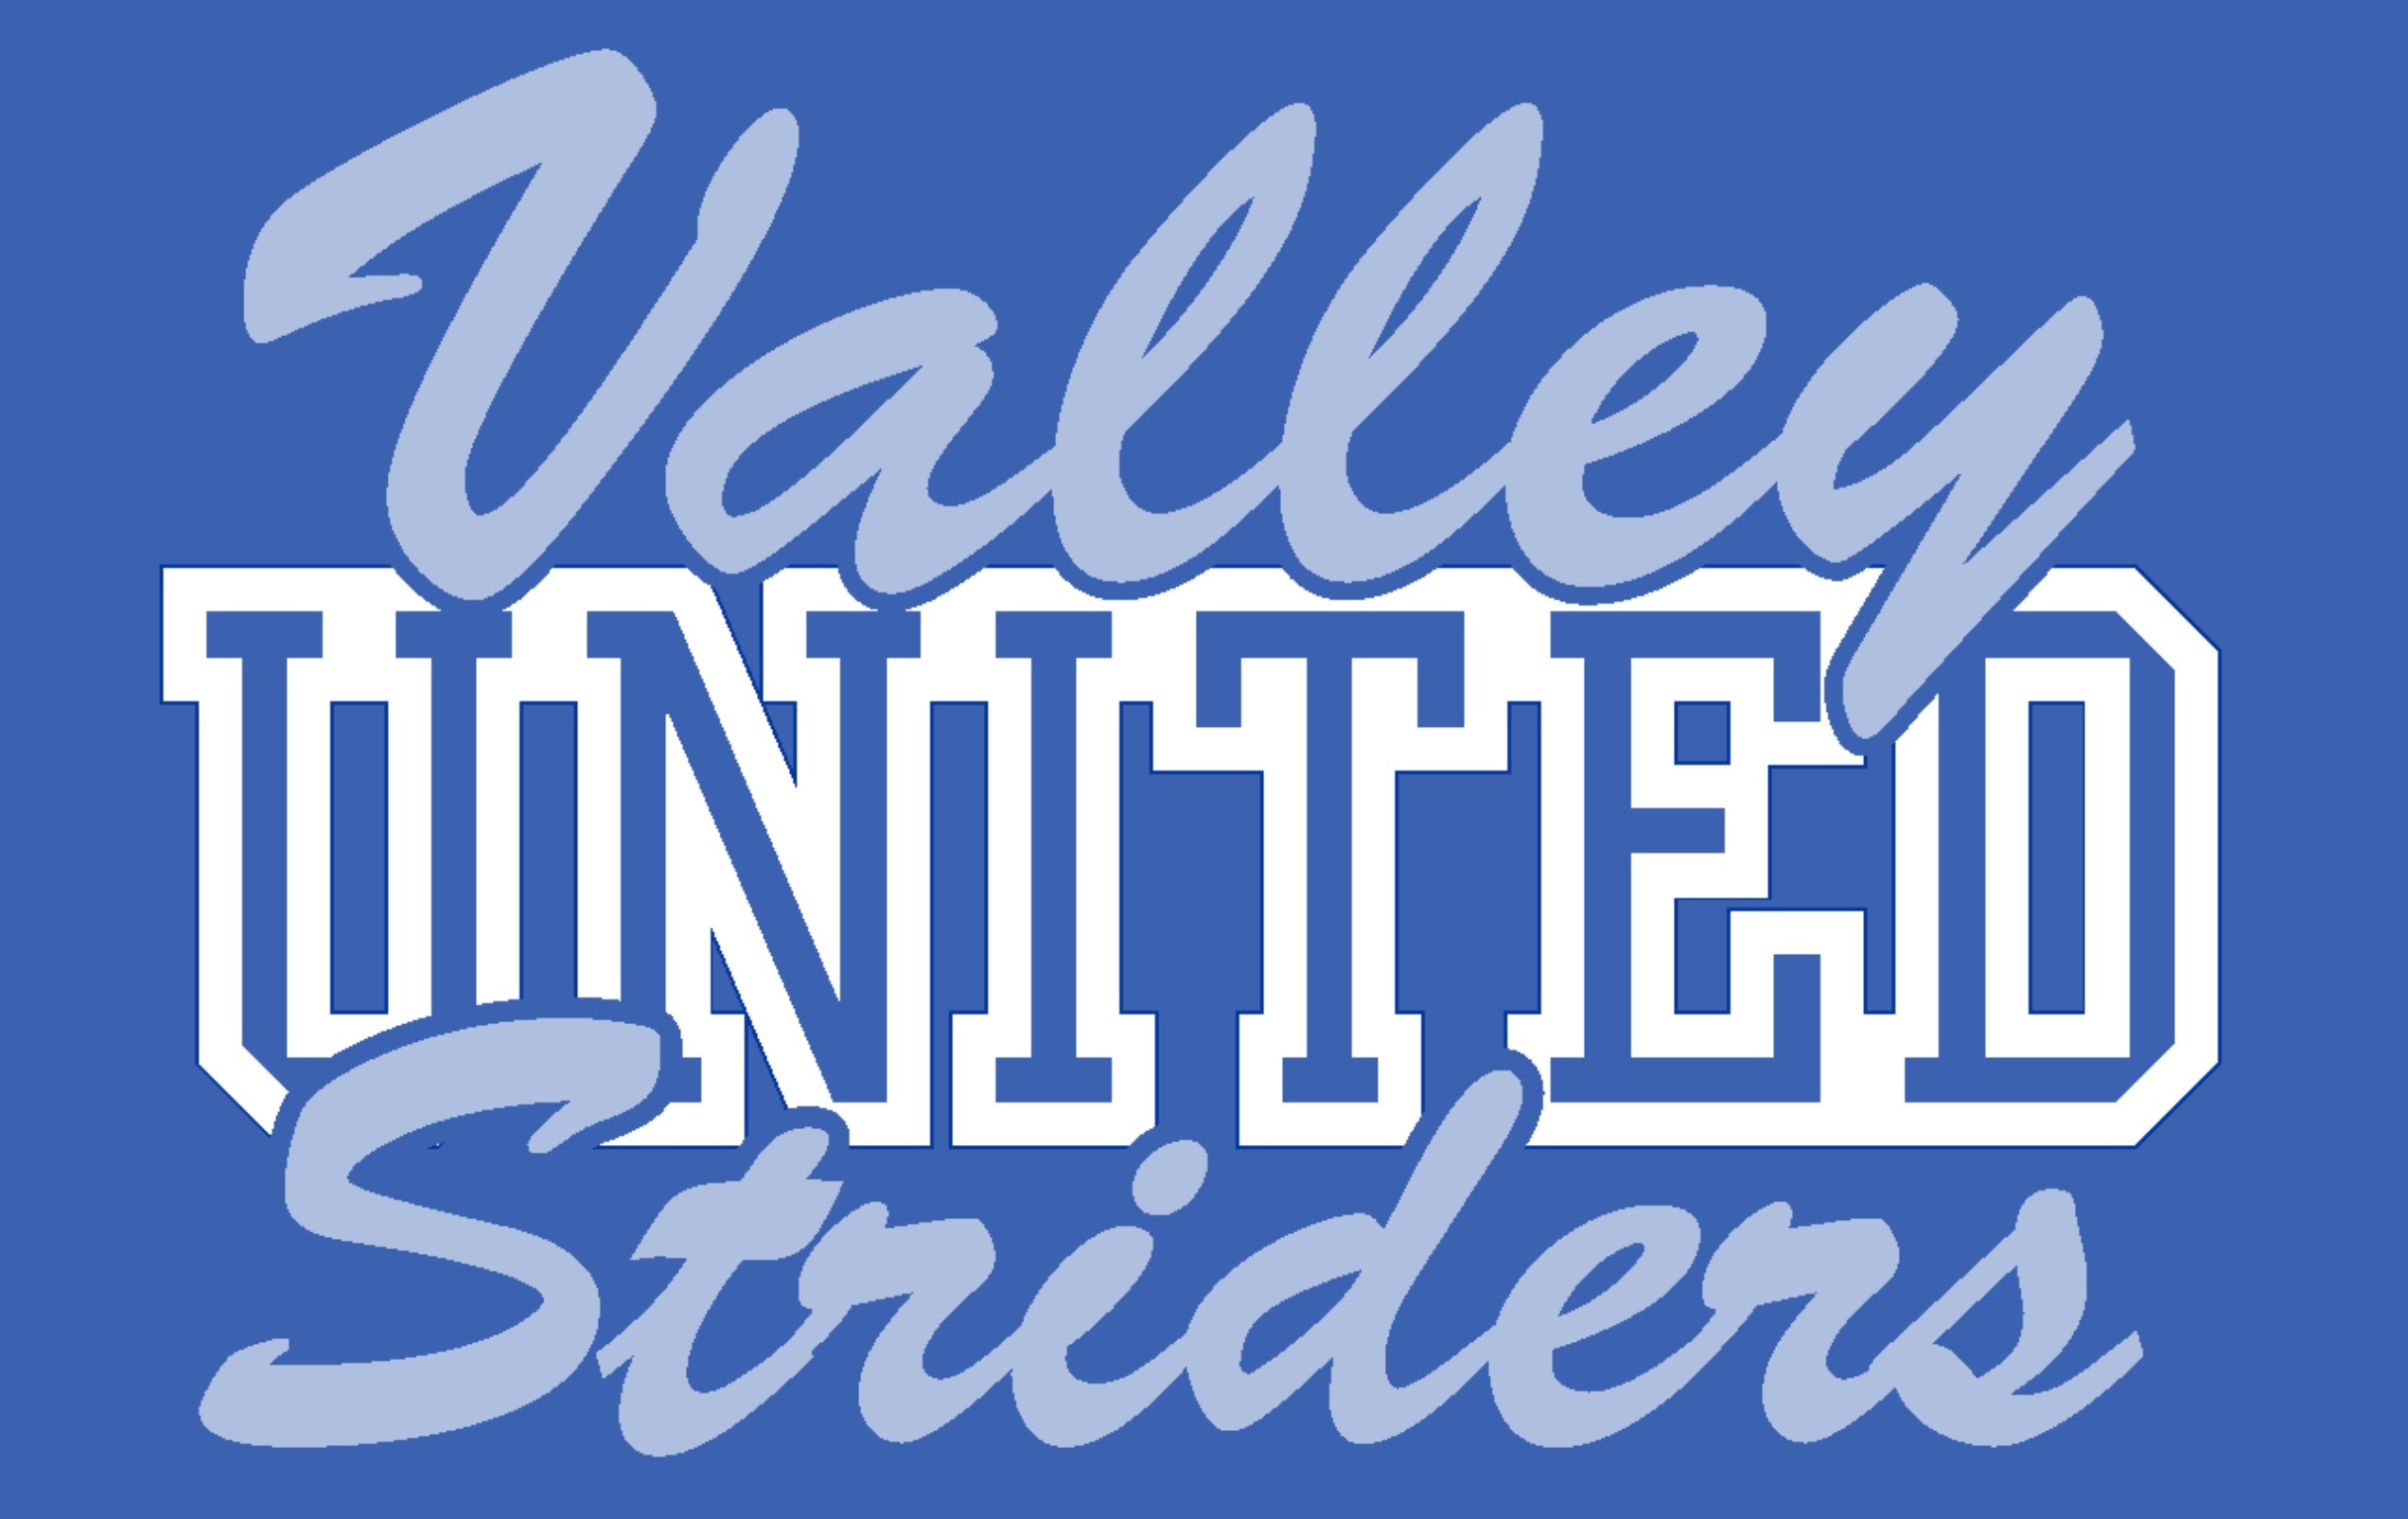 Valley_United_Striders_3